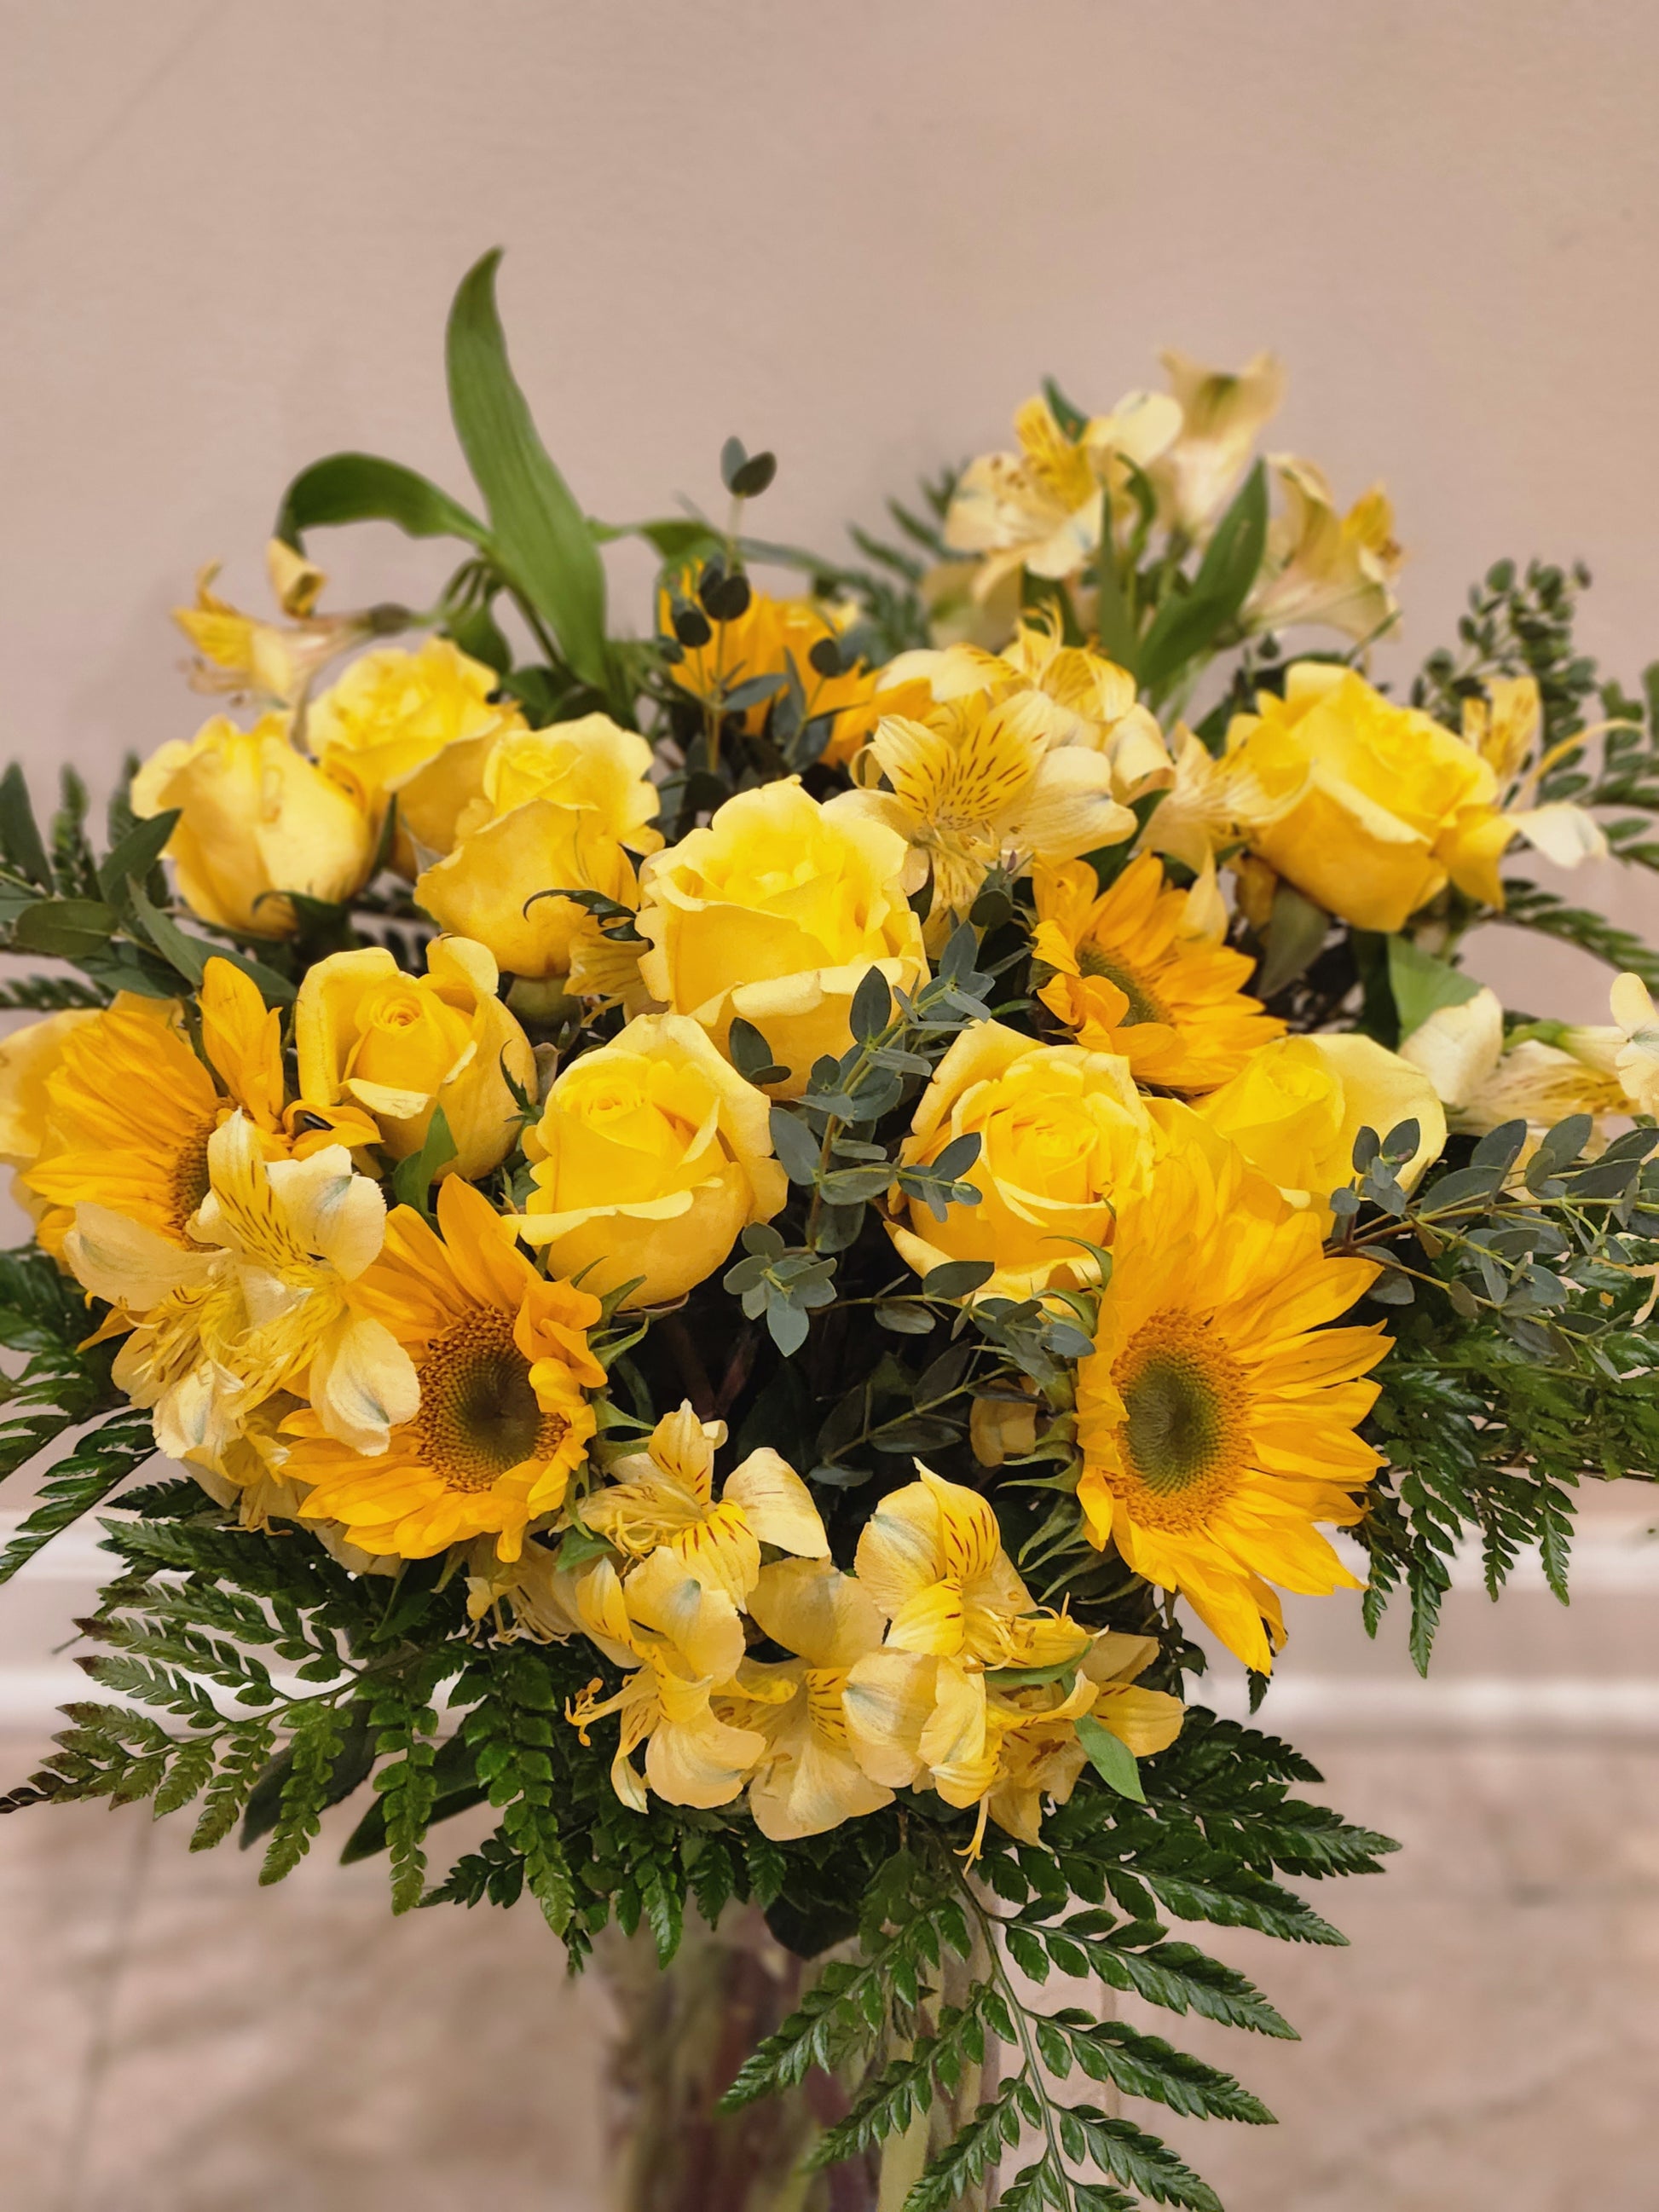 Sunshine - Beauty Flowers For You